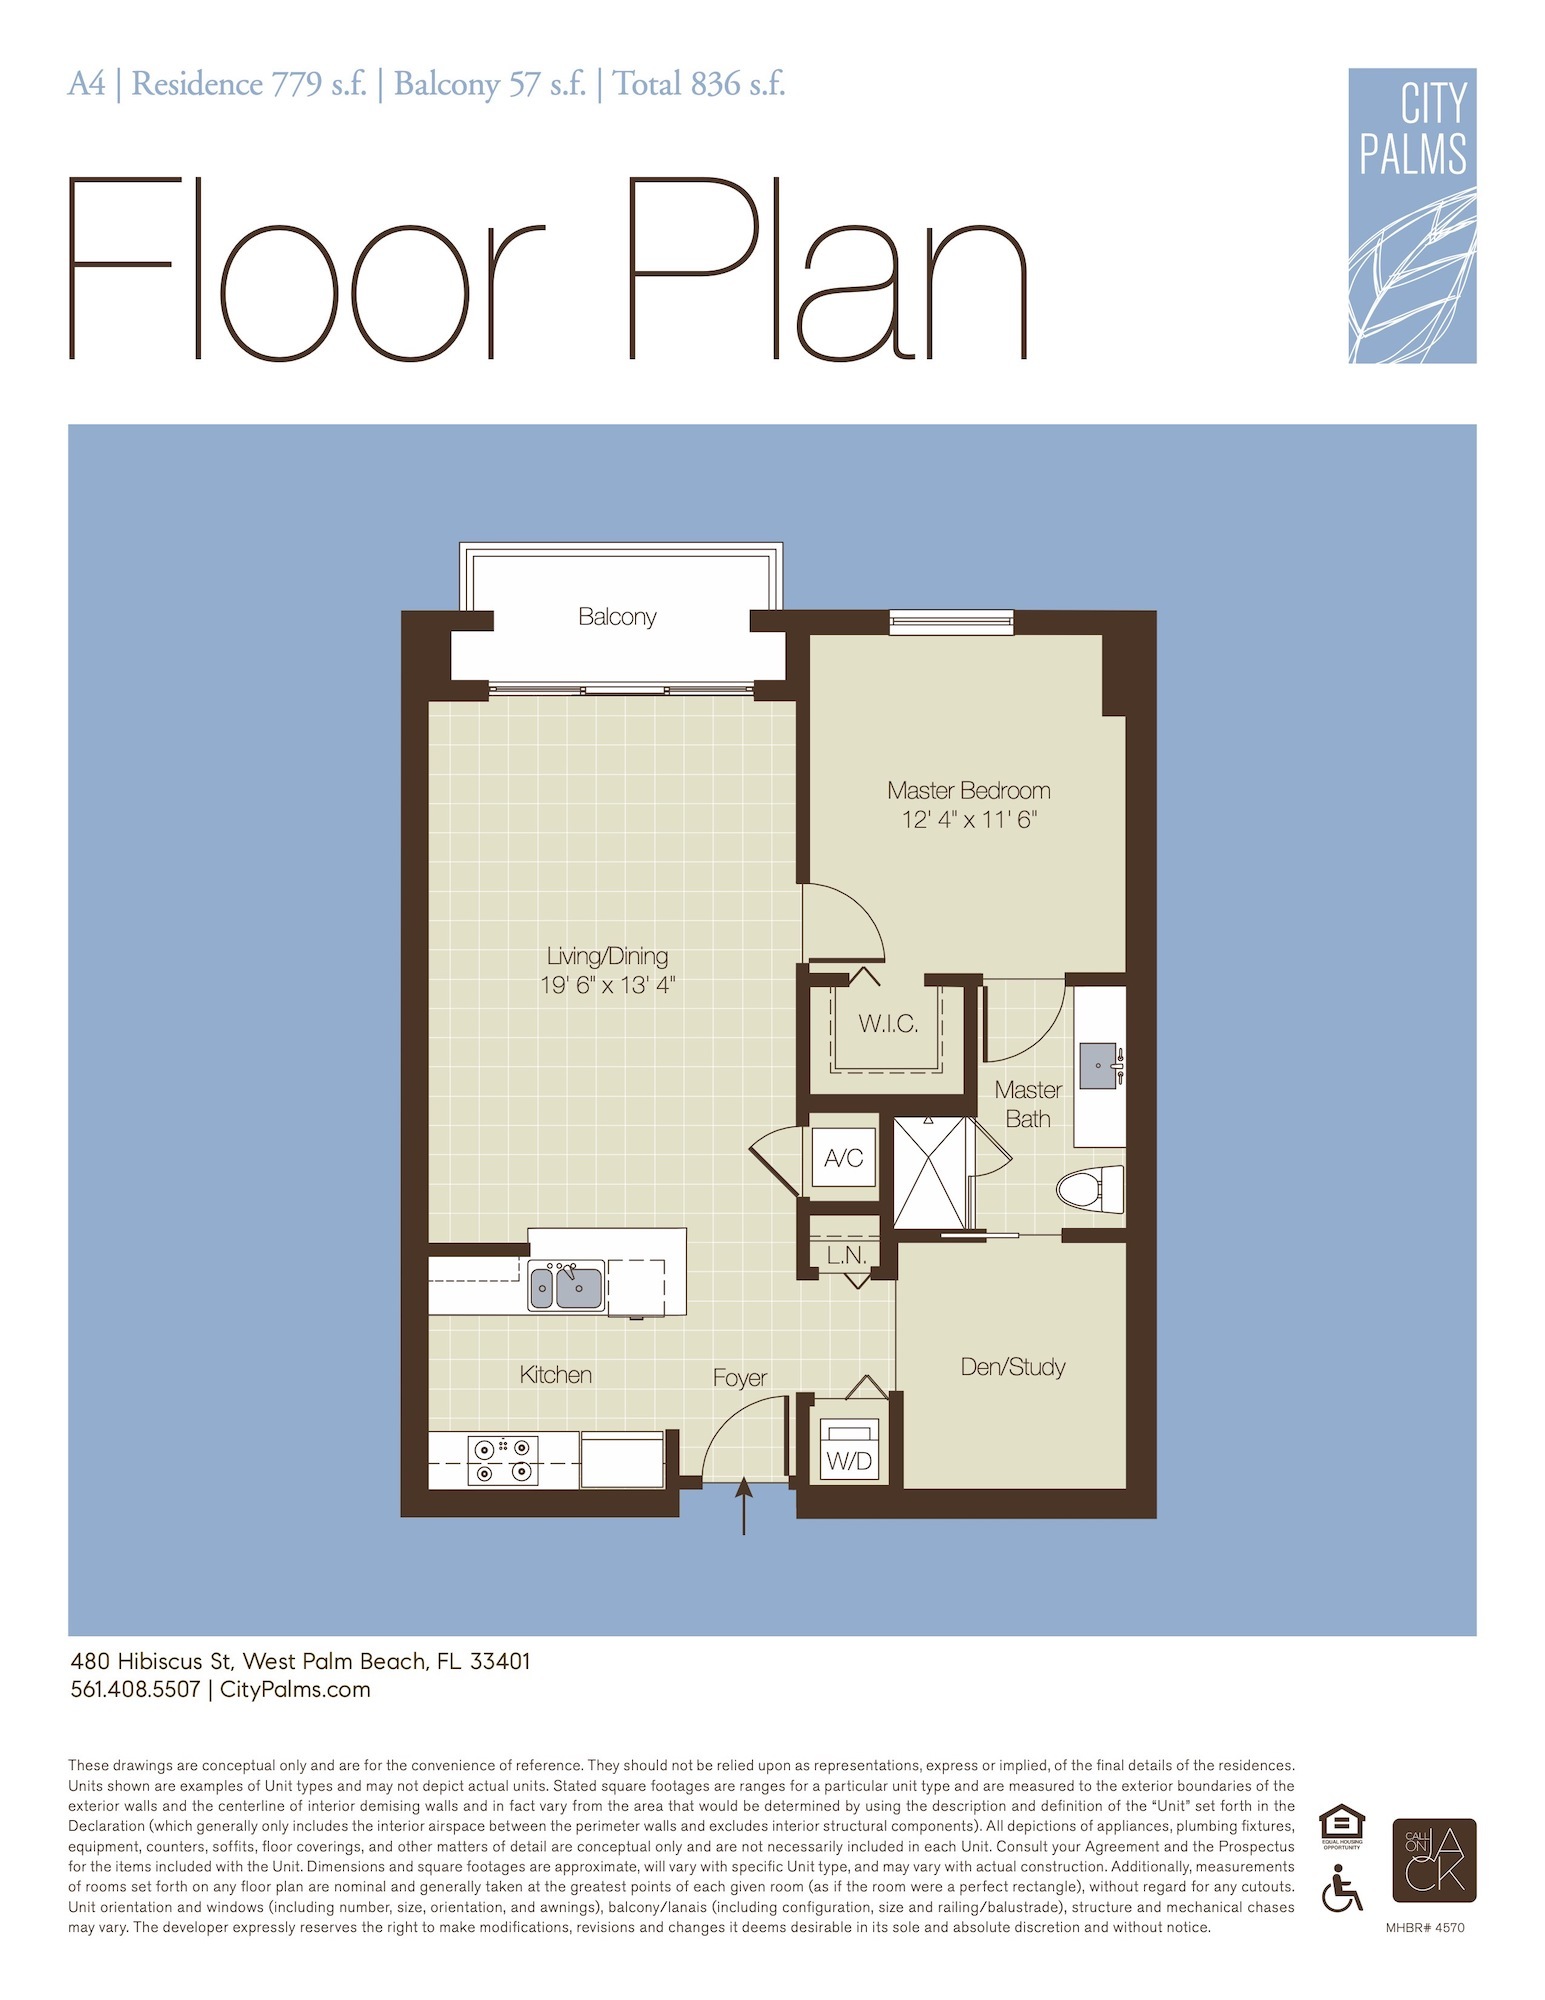 Floor Plan for City Palms Floorplans, A4